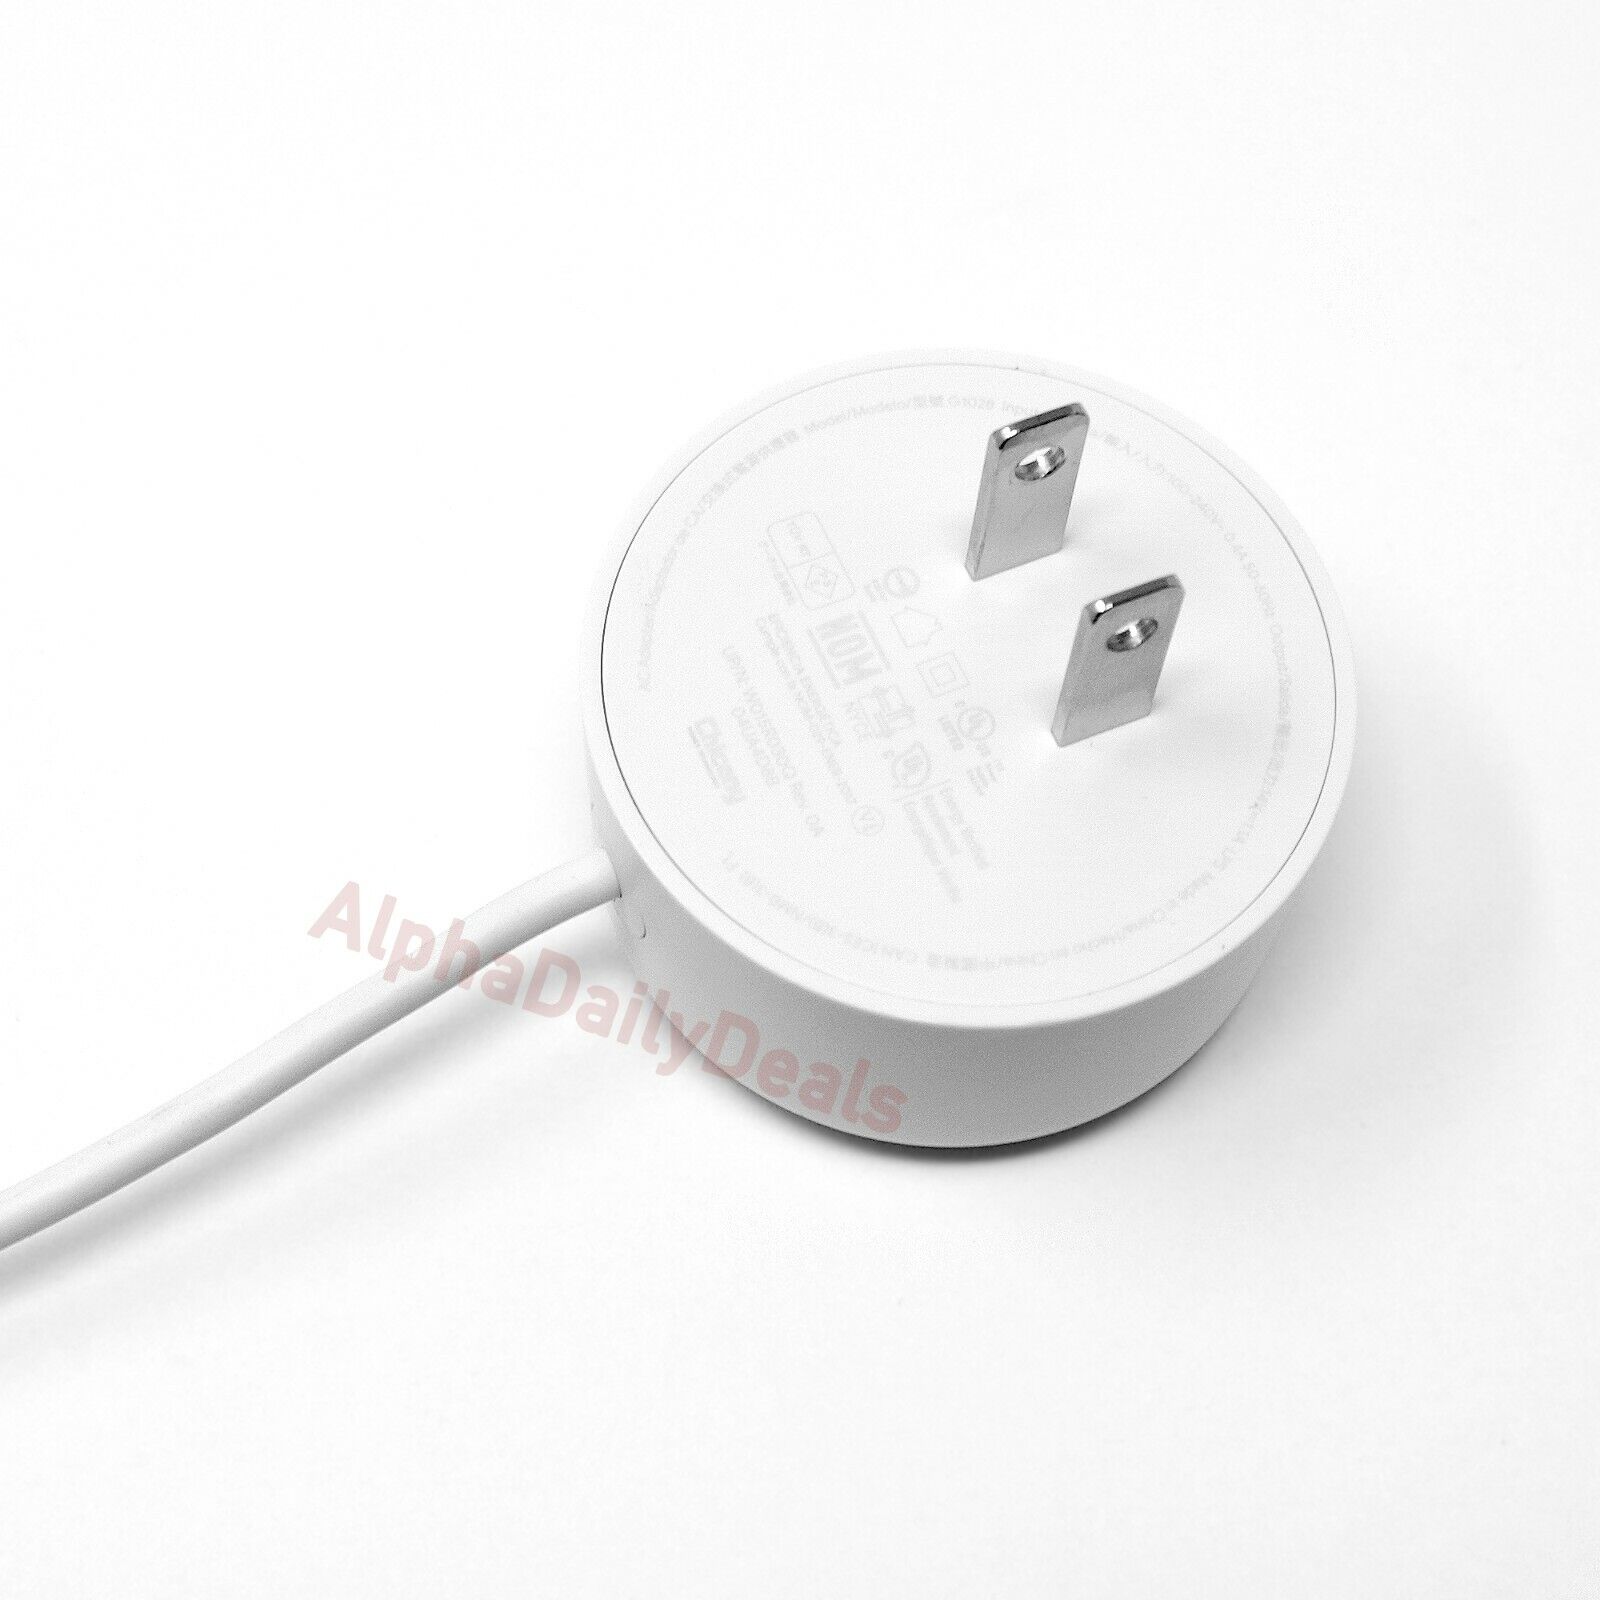 Genuine OEM Google Home Nest Mini Hub Power Supply Adapter Cord W18-015N1A G1028